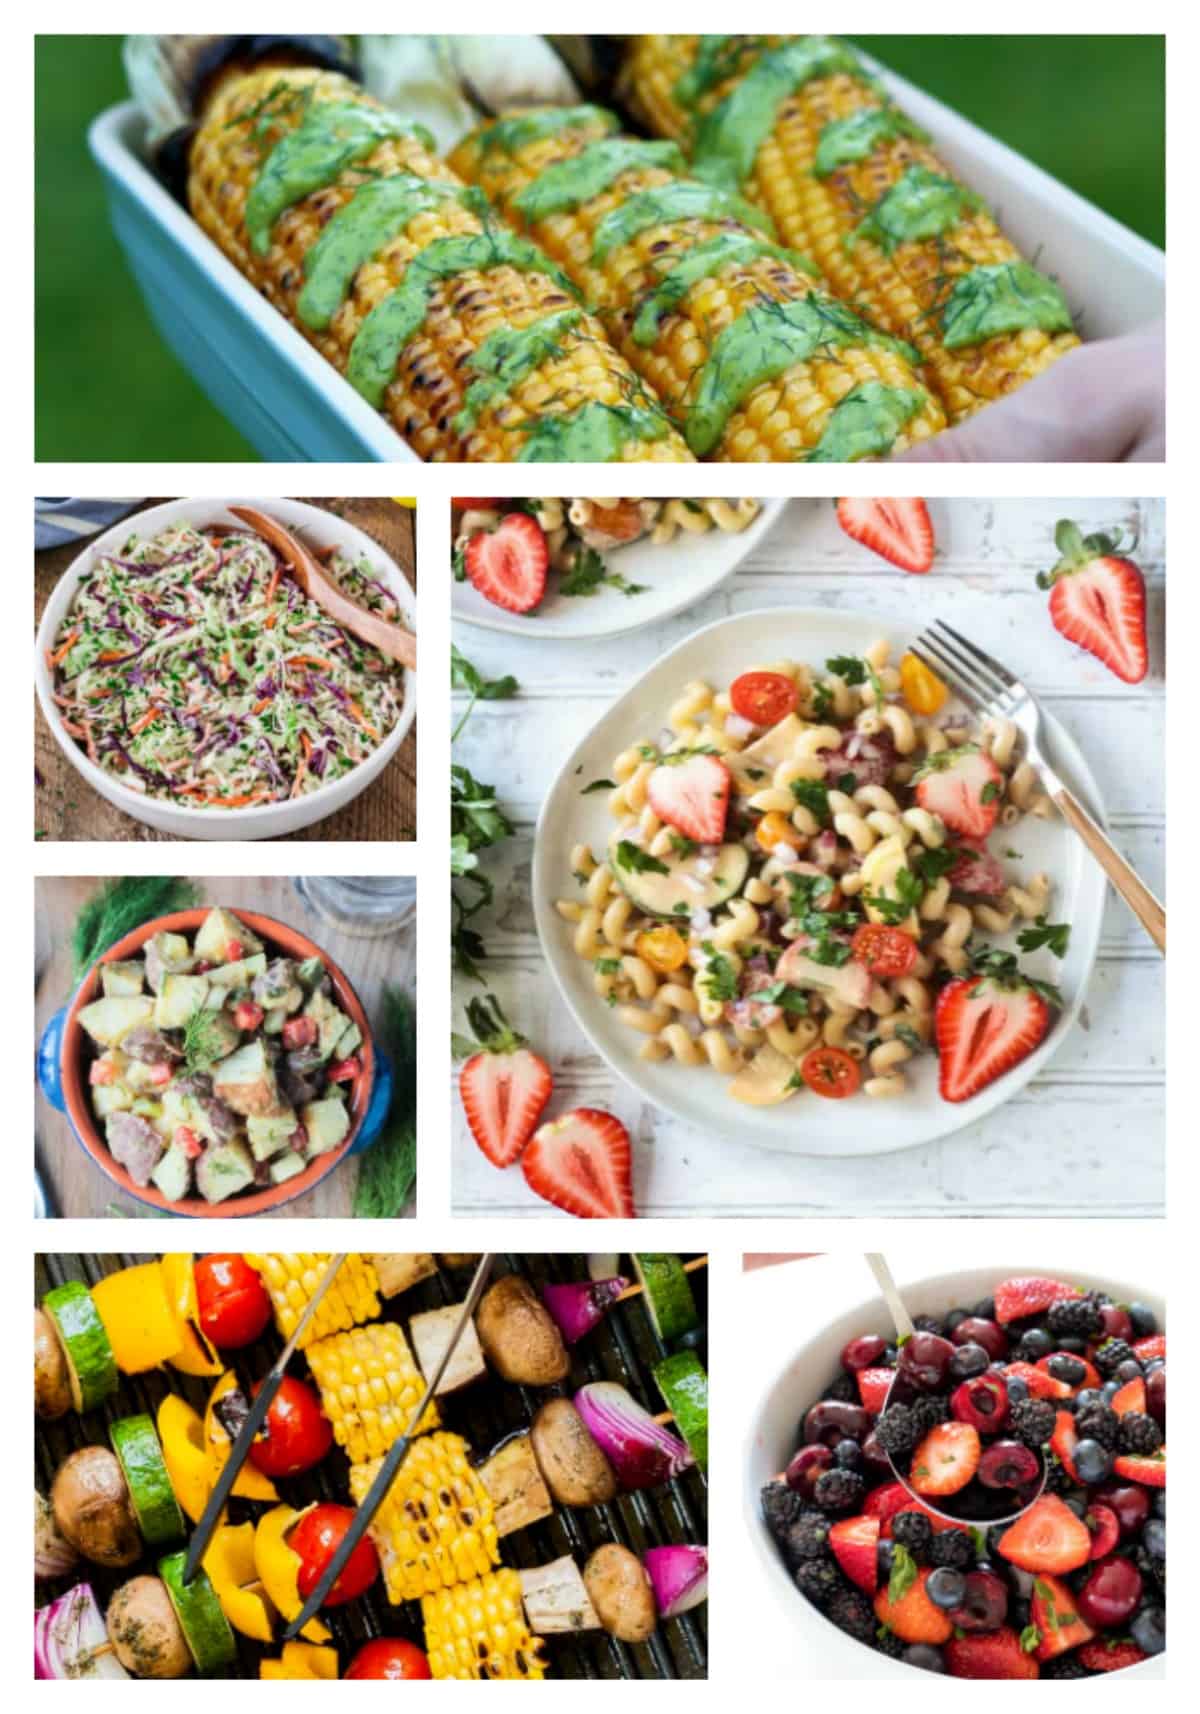 6 vegan side dishes collage: Corn, pasta salad, coleslaw, potato salad, fruit salad and more!